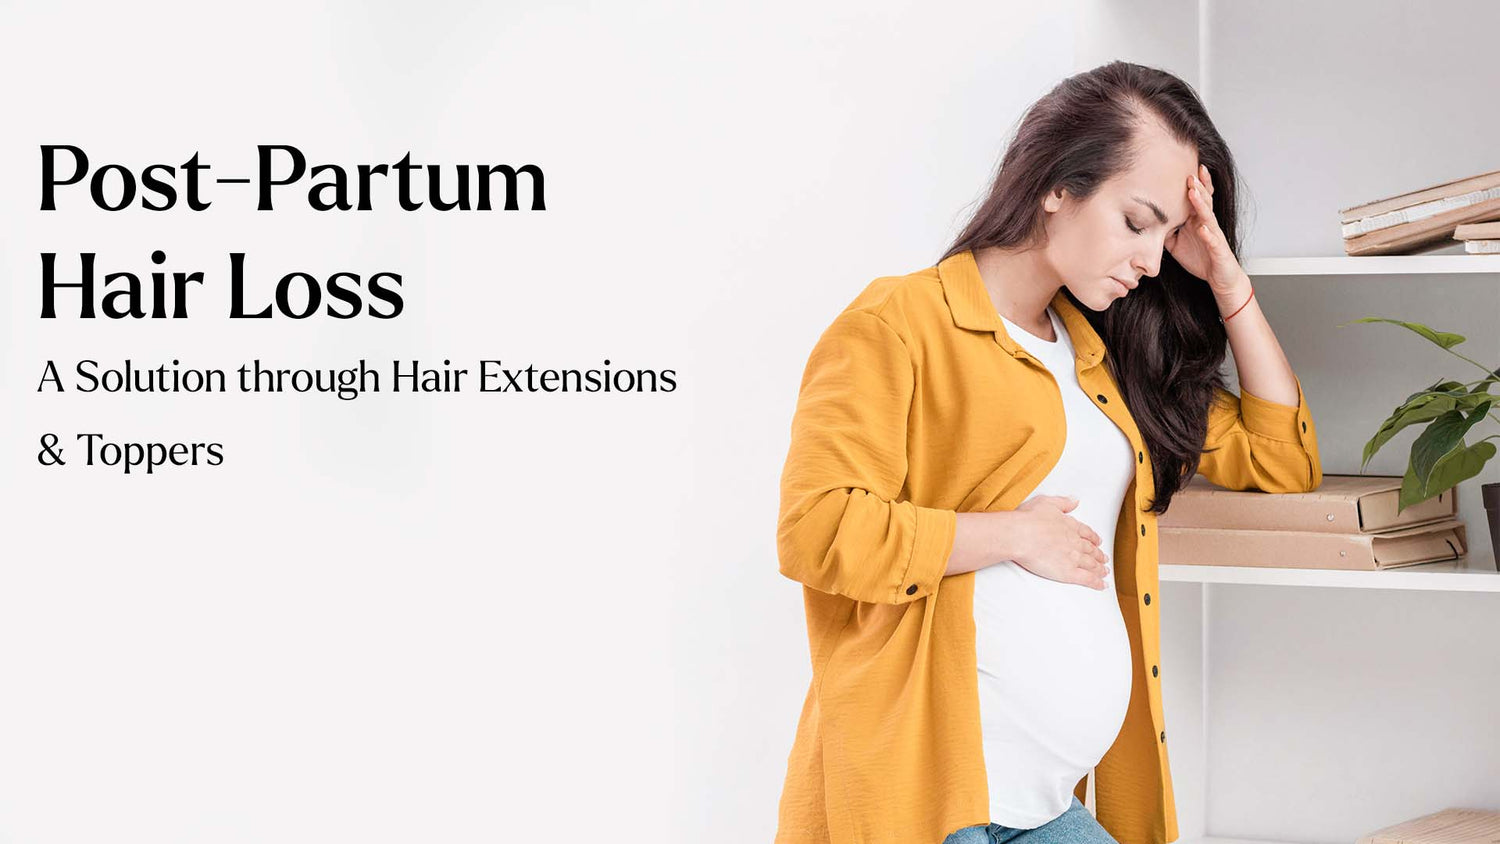 Hair Loss due to Pregnancy: A Solution through Hair Extensions